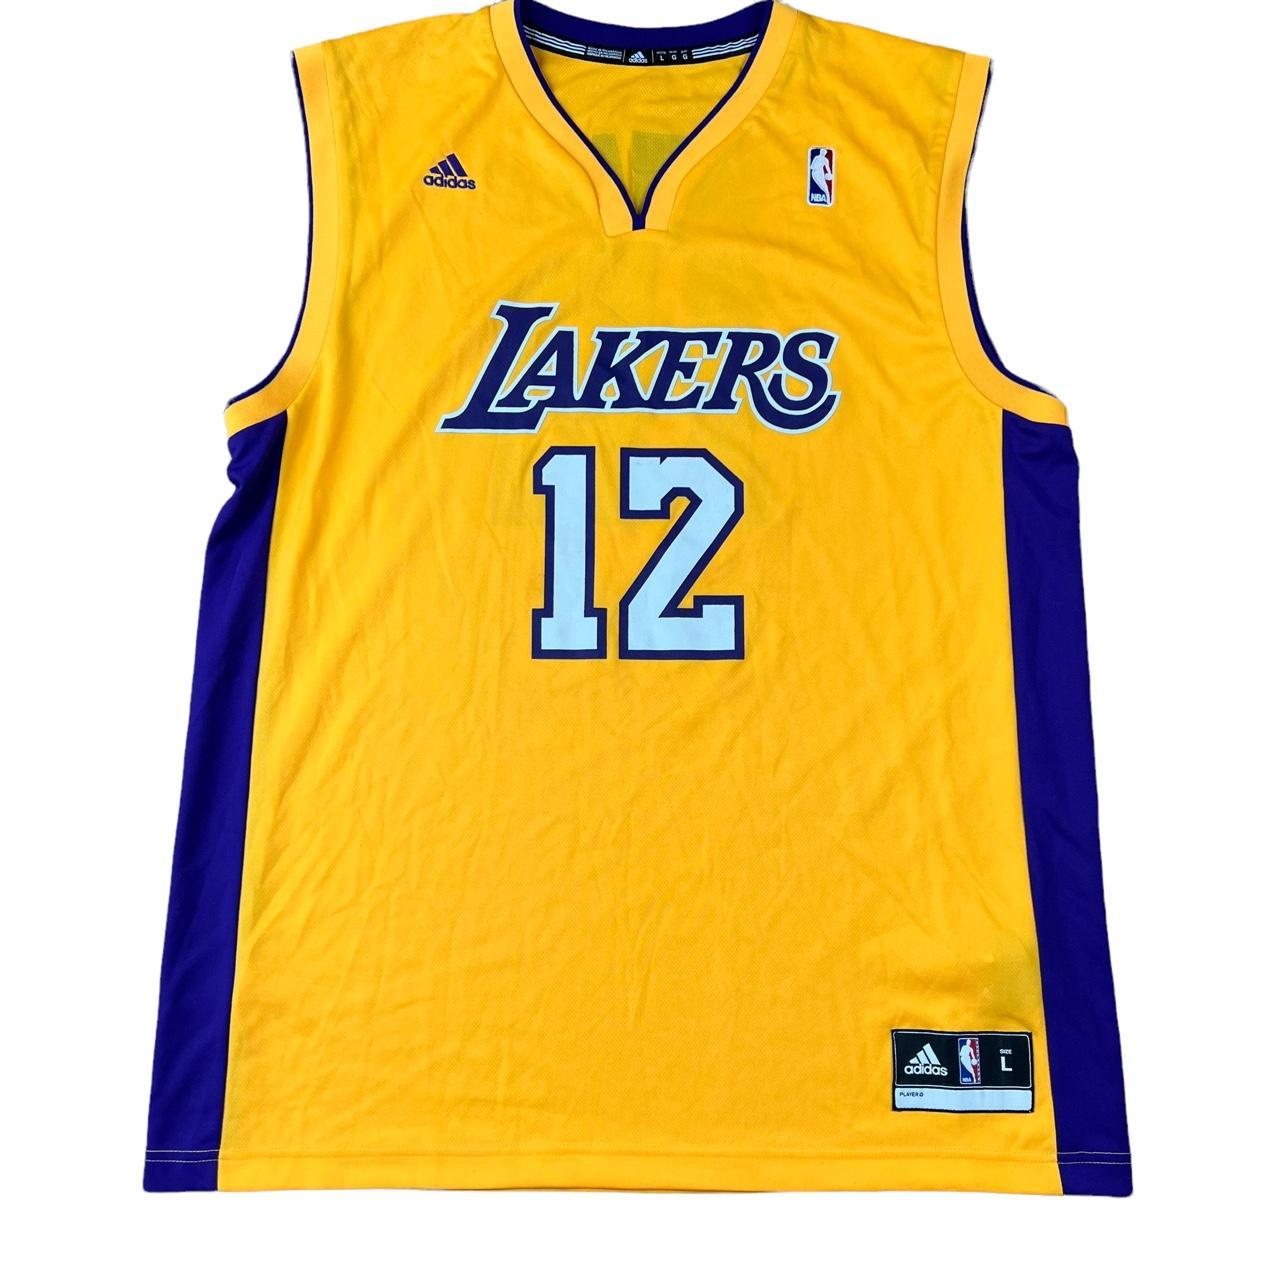 New Nike Men's XL Los Angeles Lakers Dwight Howard Jersey Yellow